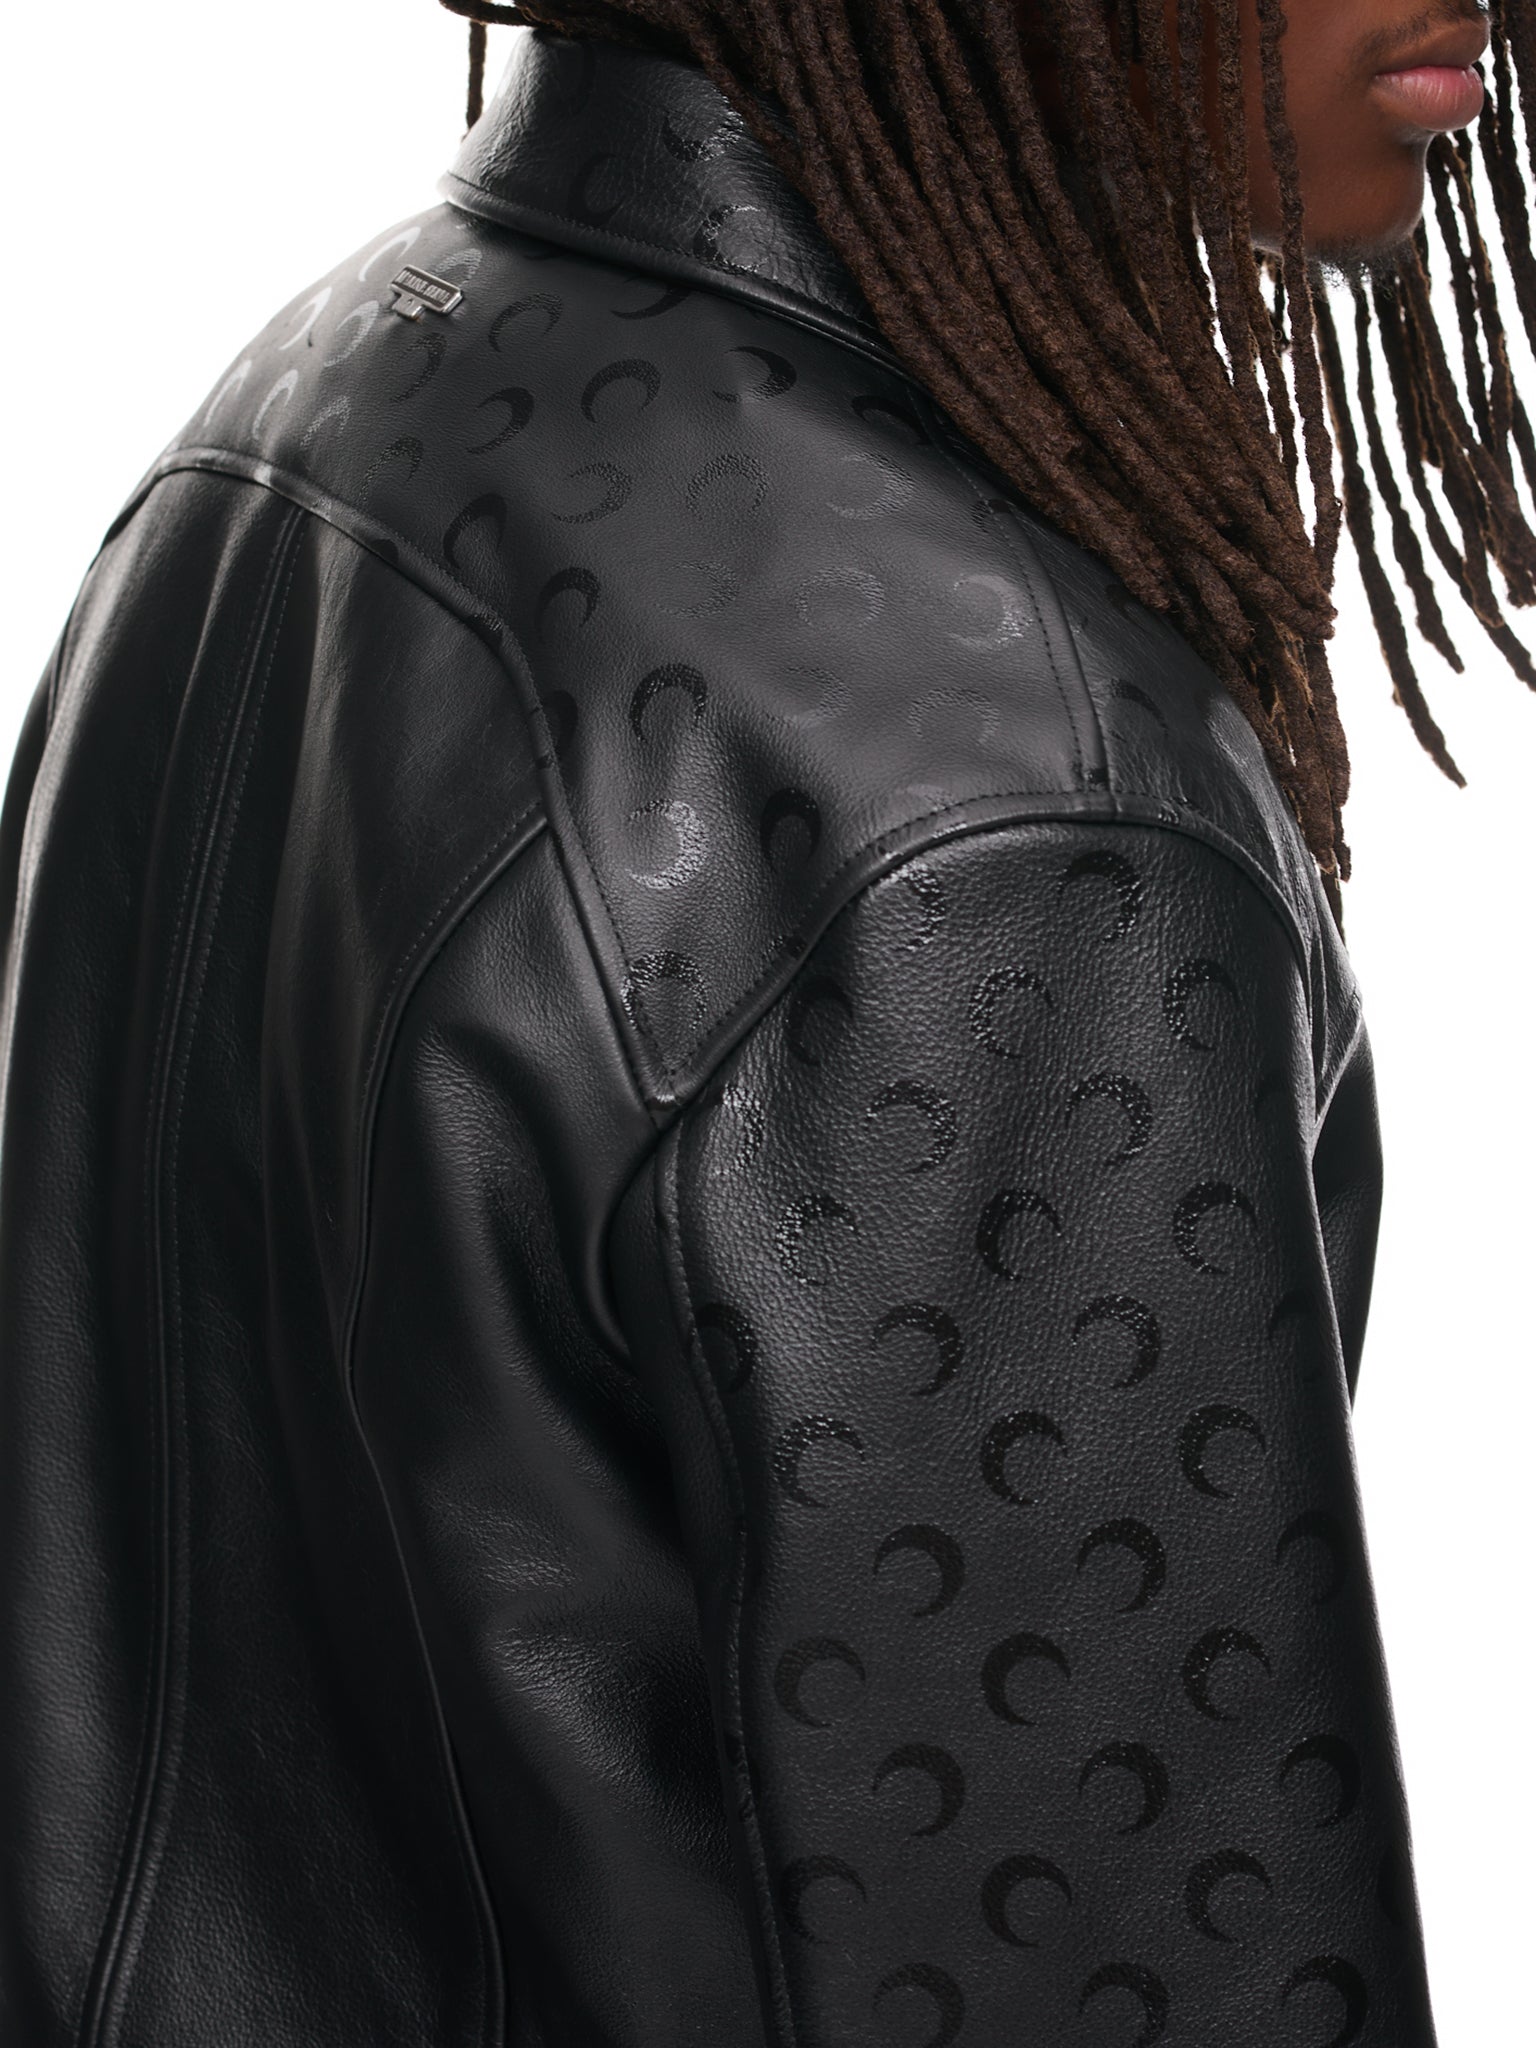 lv leather jacket mens